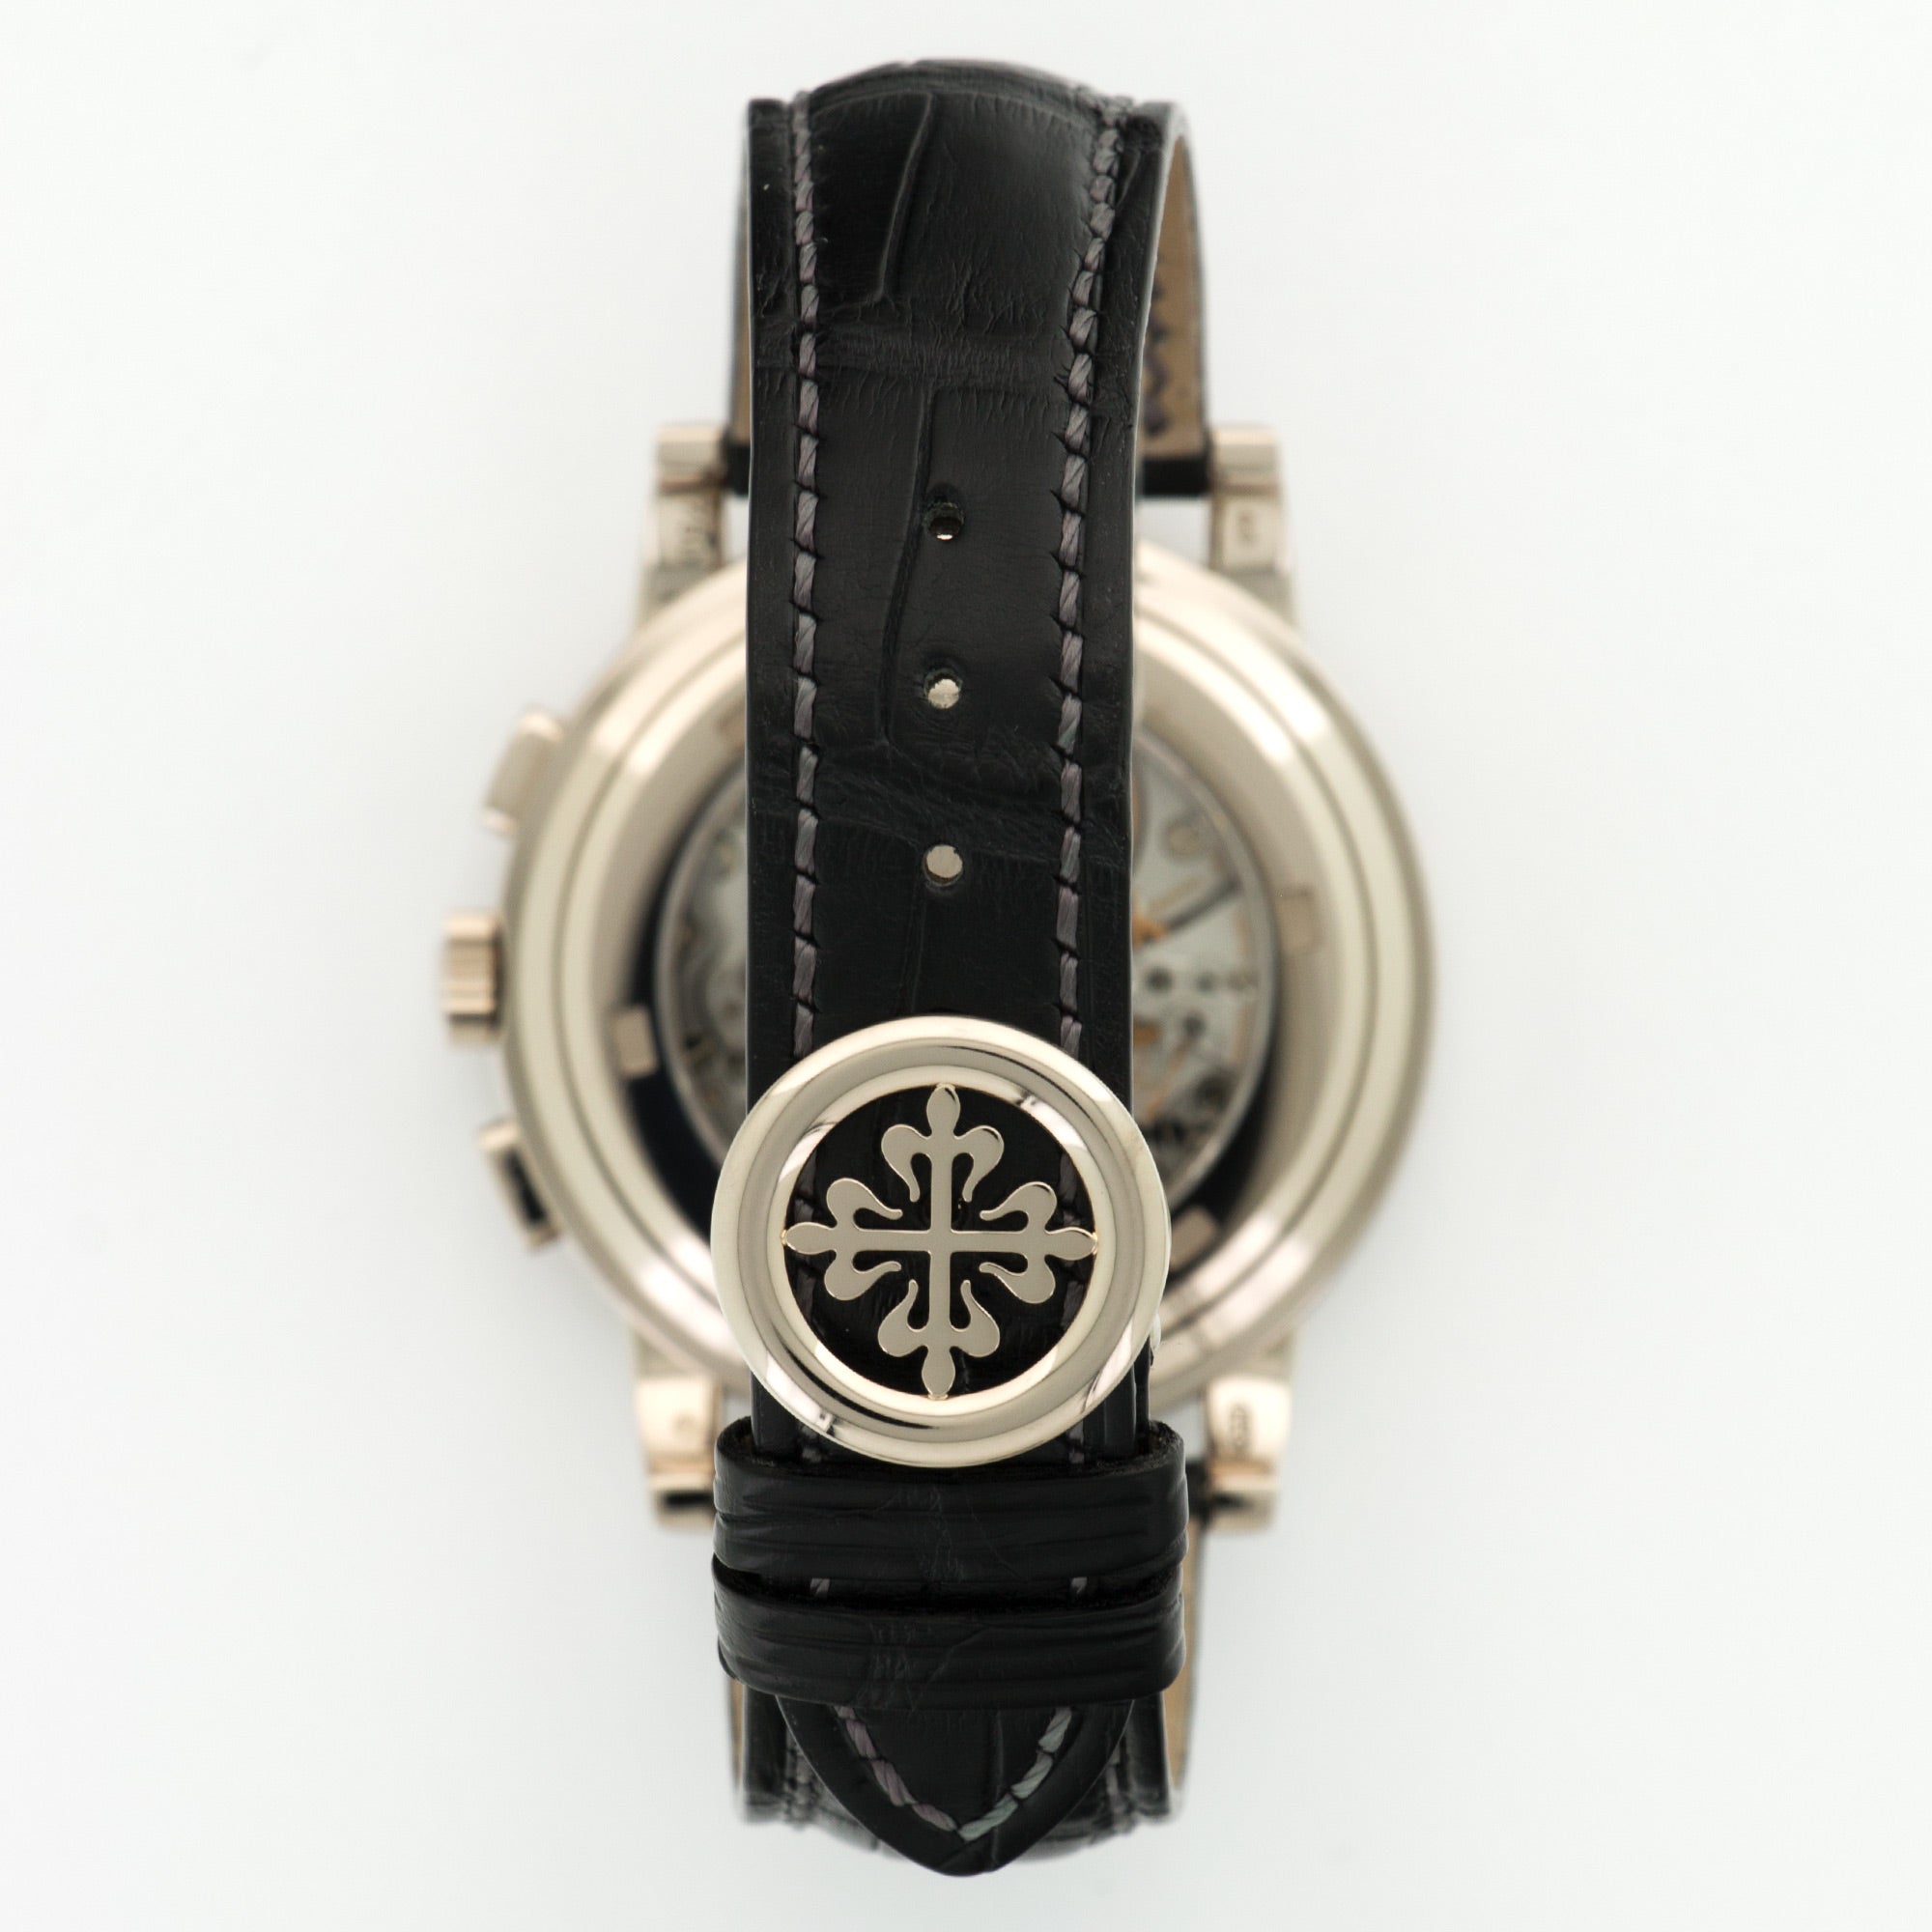 Patek Philippe - Patek Philippe White Gold Chronograph Watch Ref. 5070G - The Keystone Watches